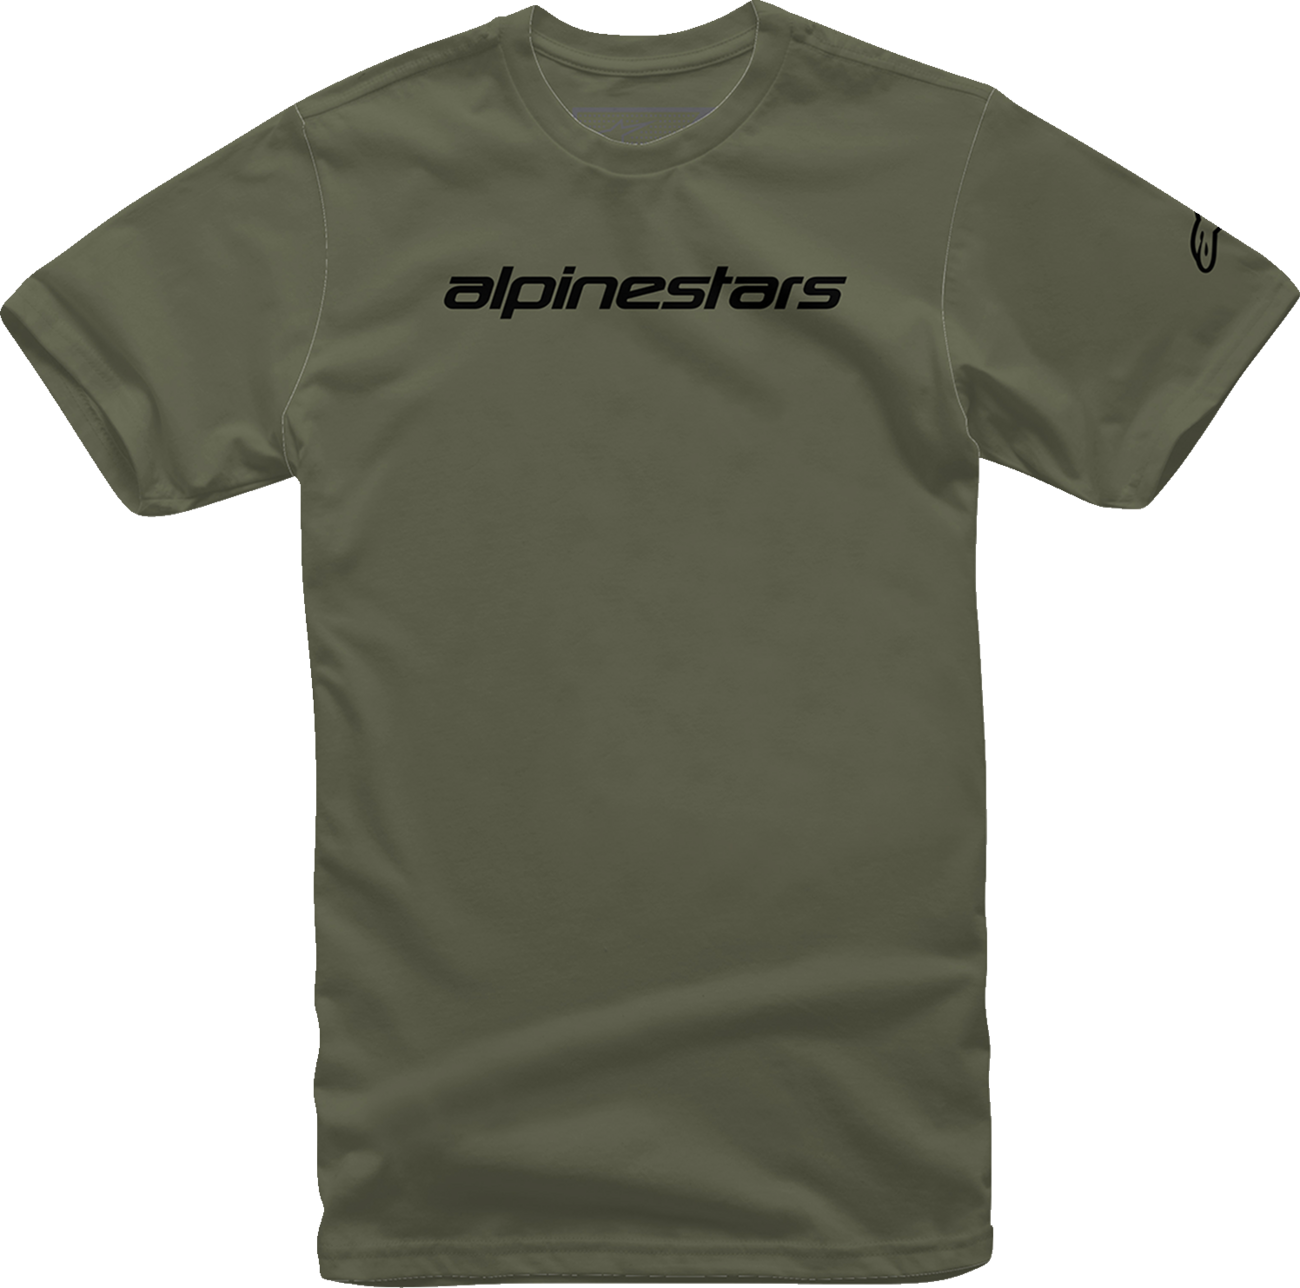 ALPINESTARS Linear Wordmark T-Shirt - Military/Black - Large 1212720206910L